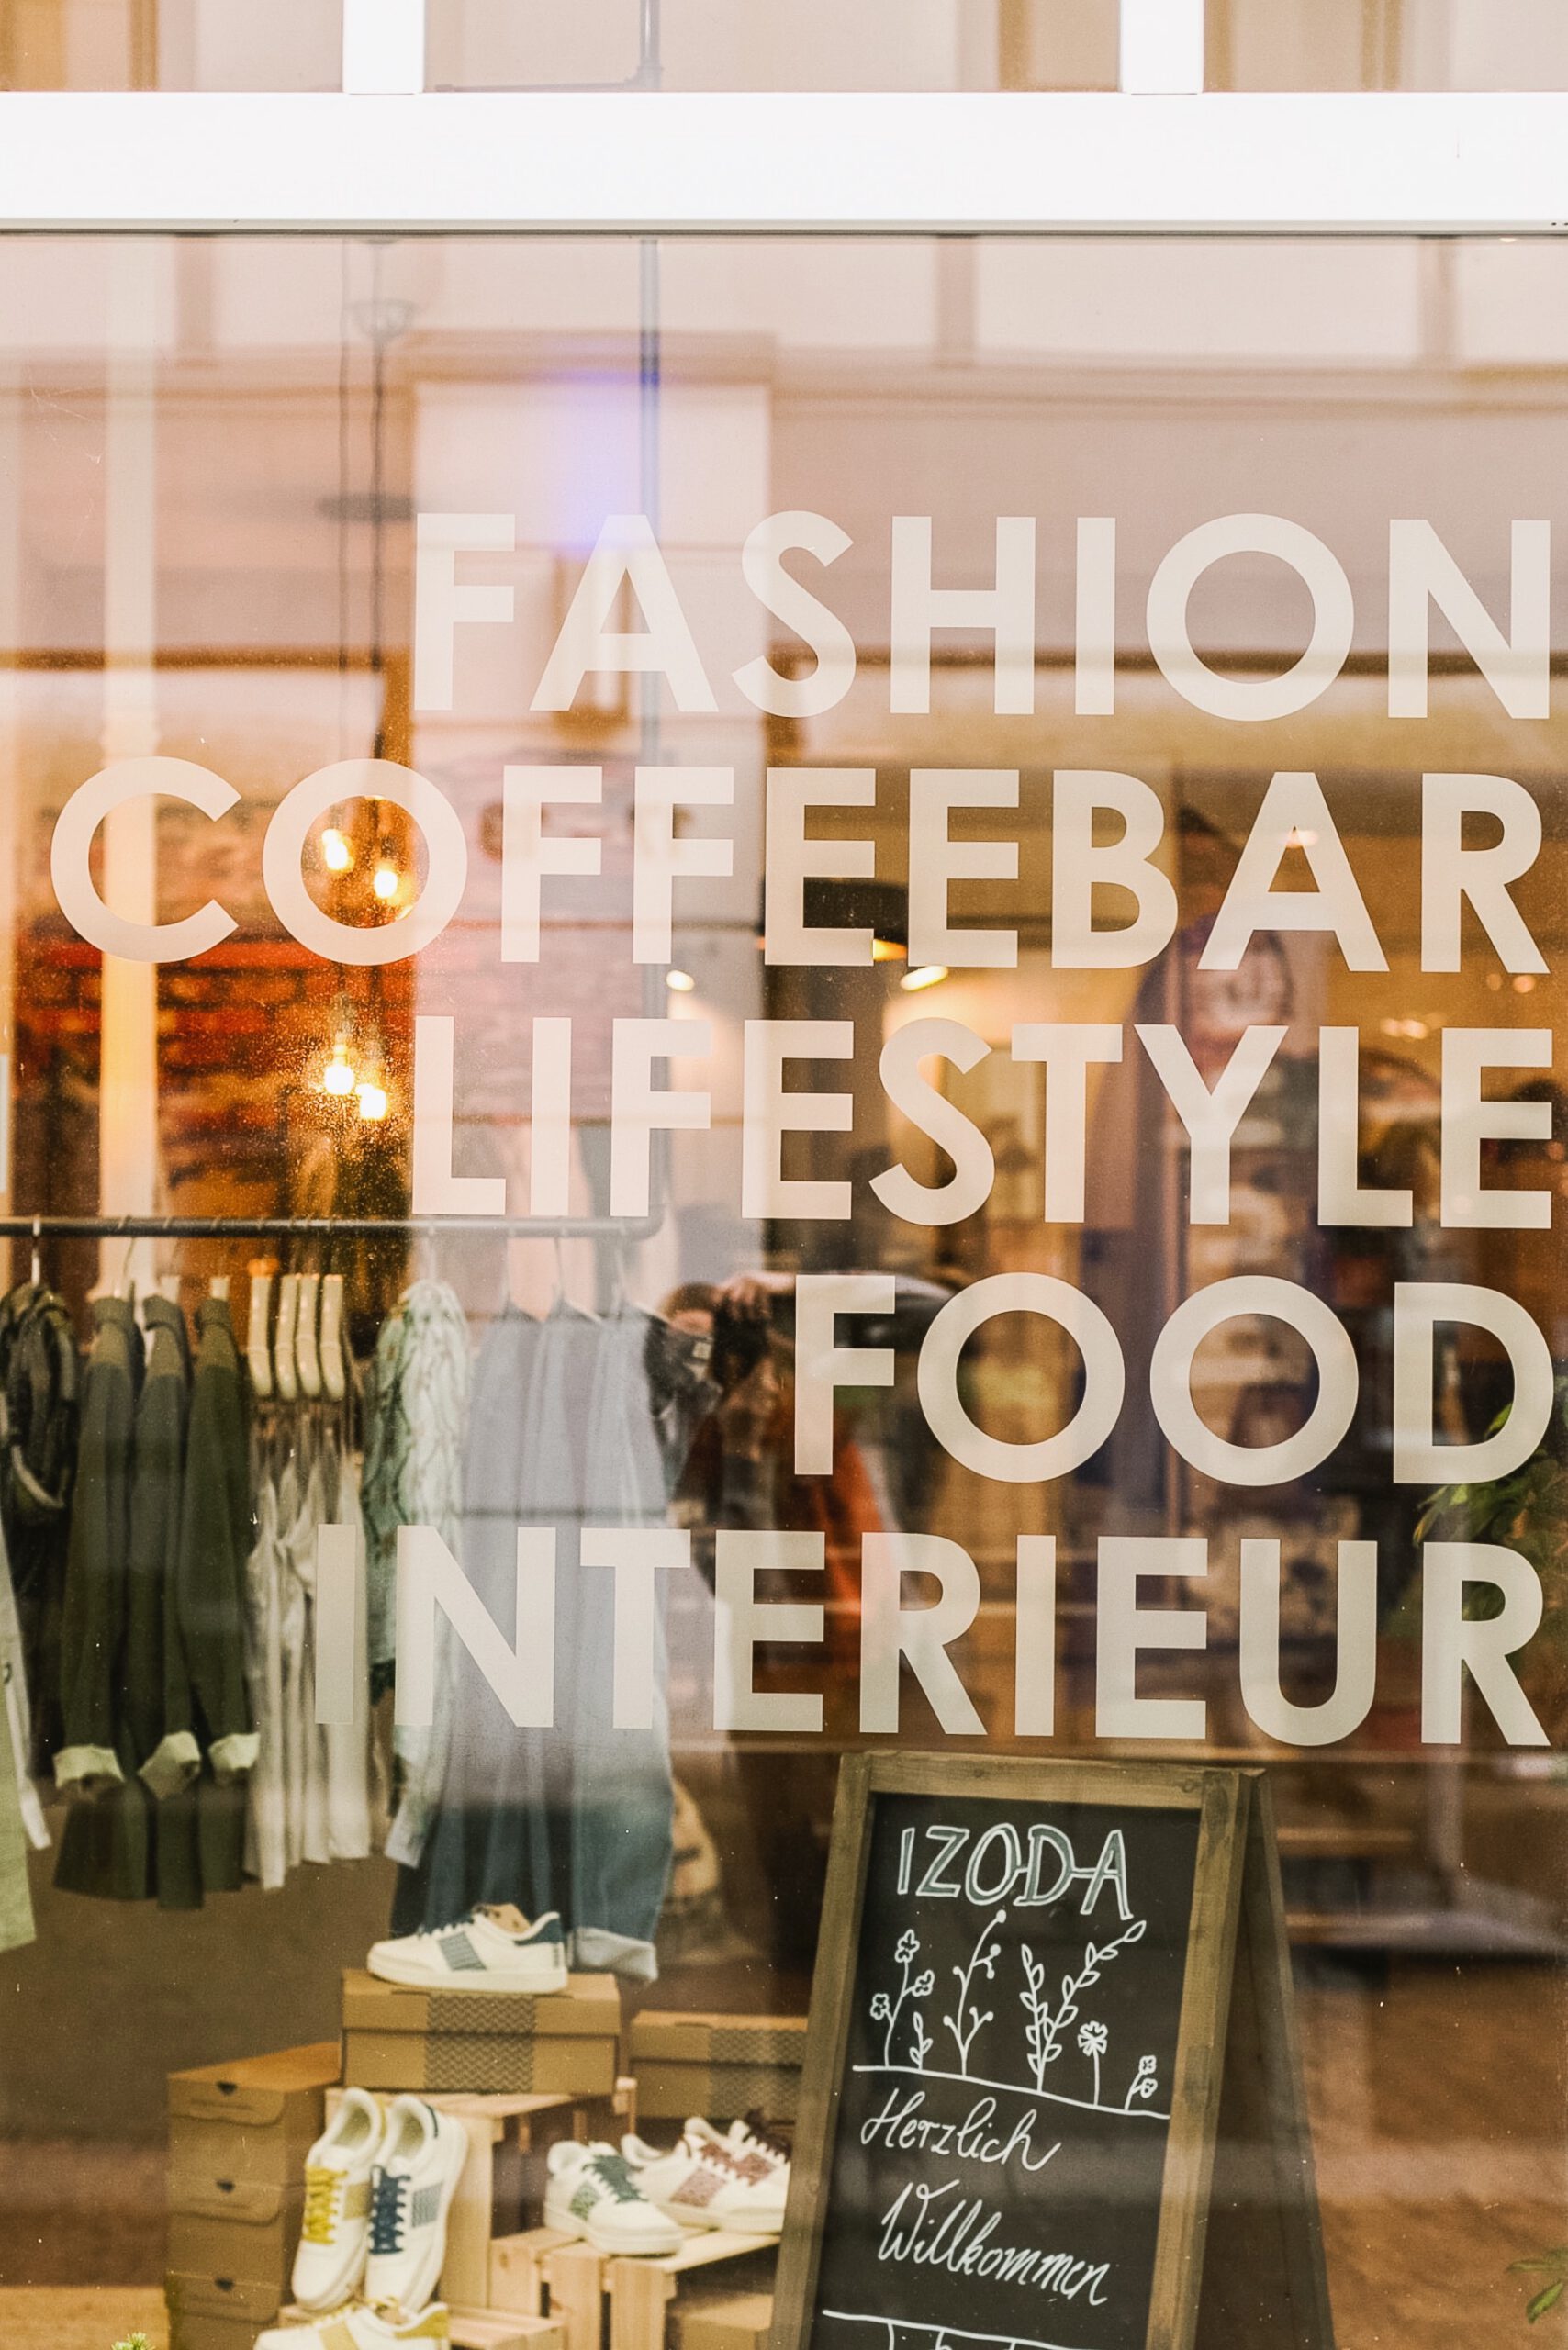 Fashion Coffeebar Lifestyle Food Interieur